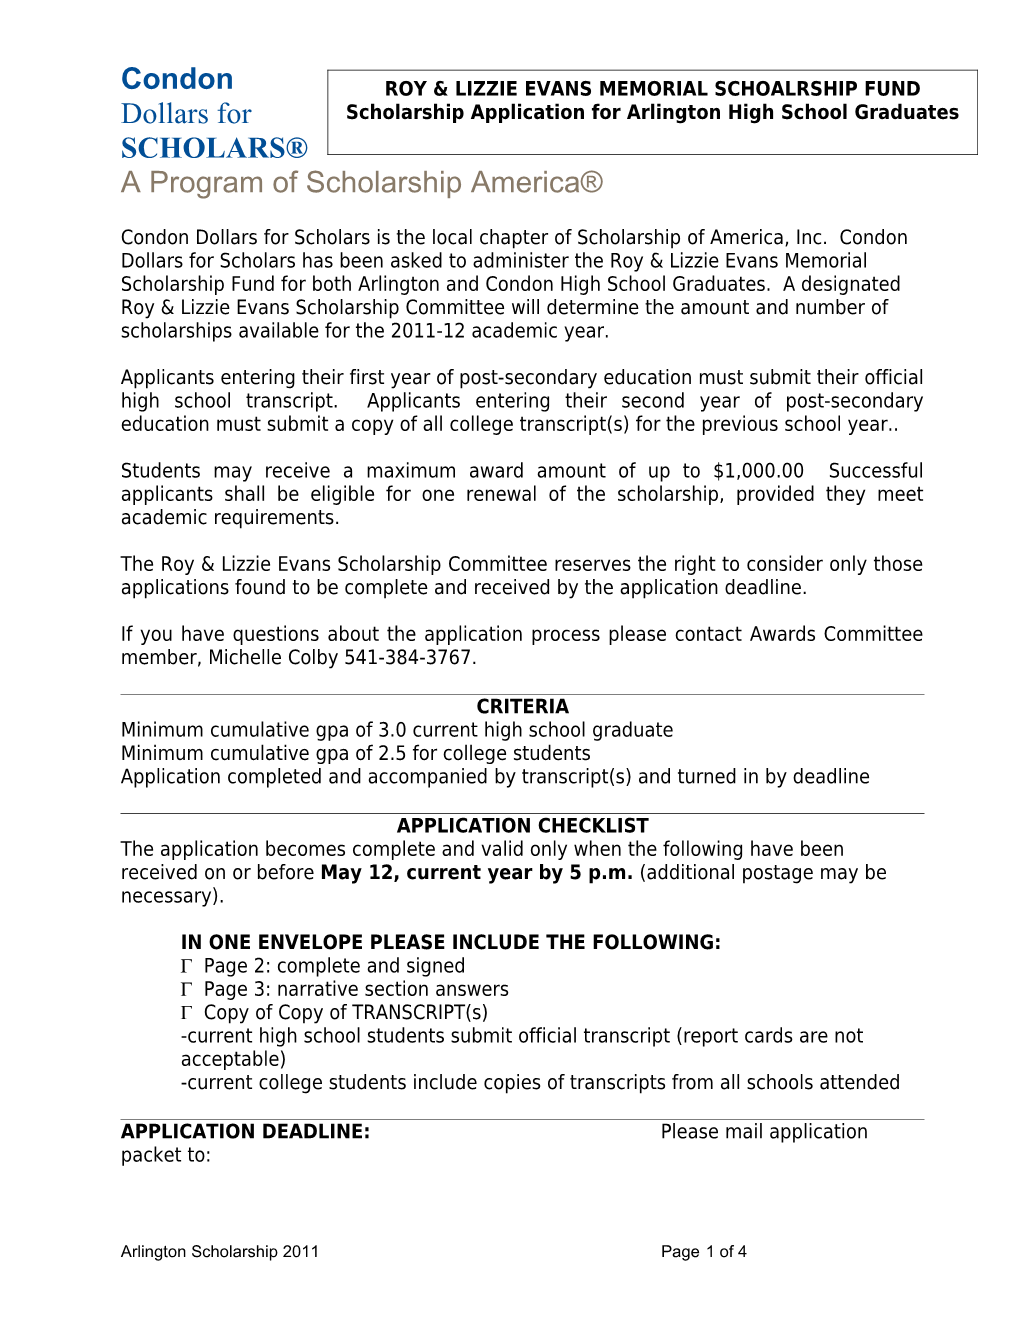 A Program of Scholarship America